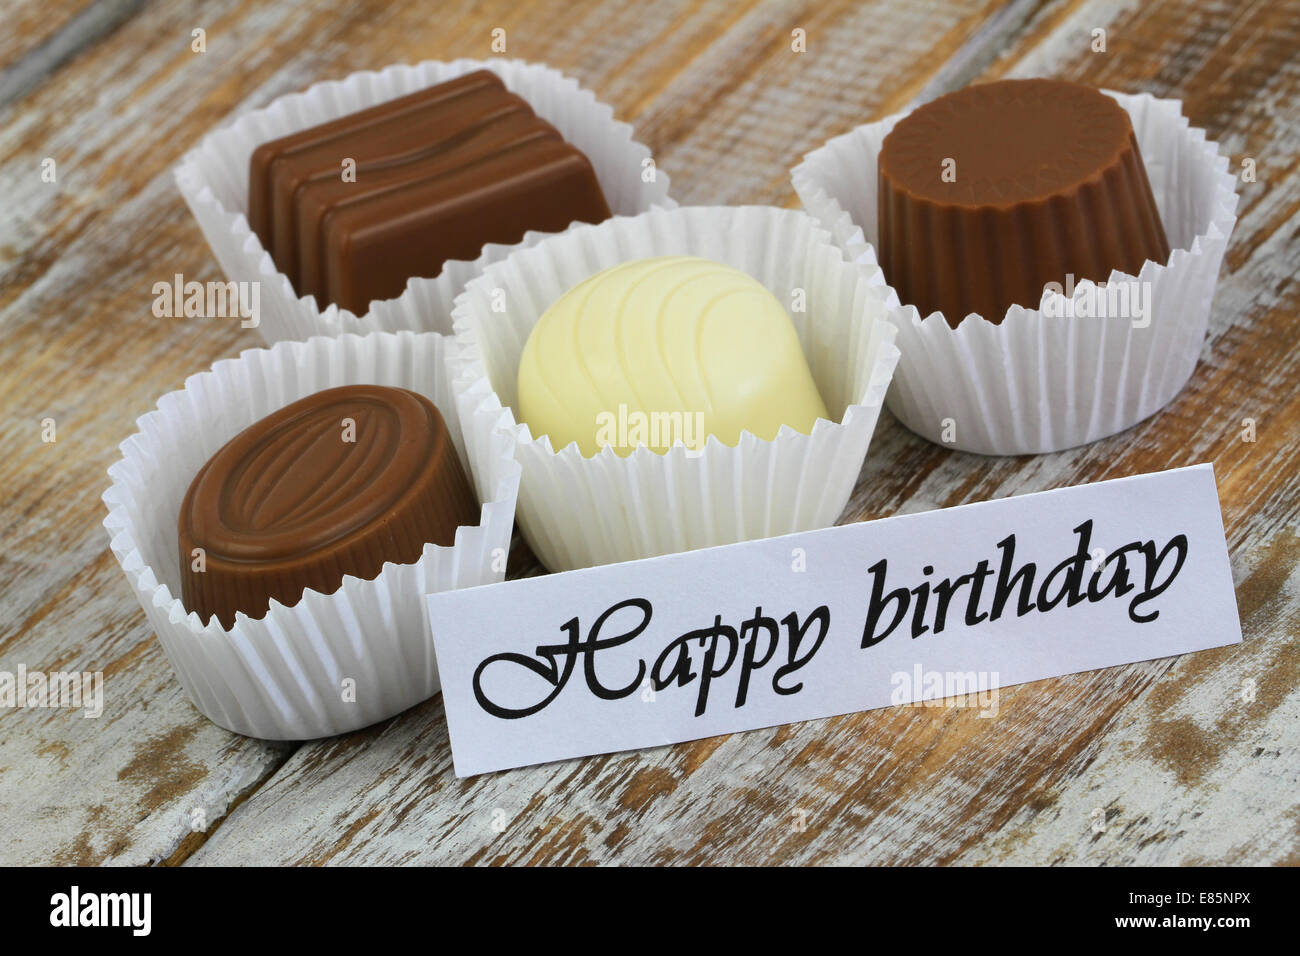 Happy birthday card with assorted chocolates Stock Photo